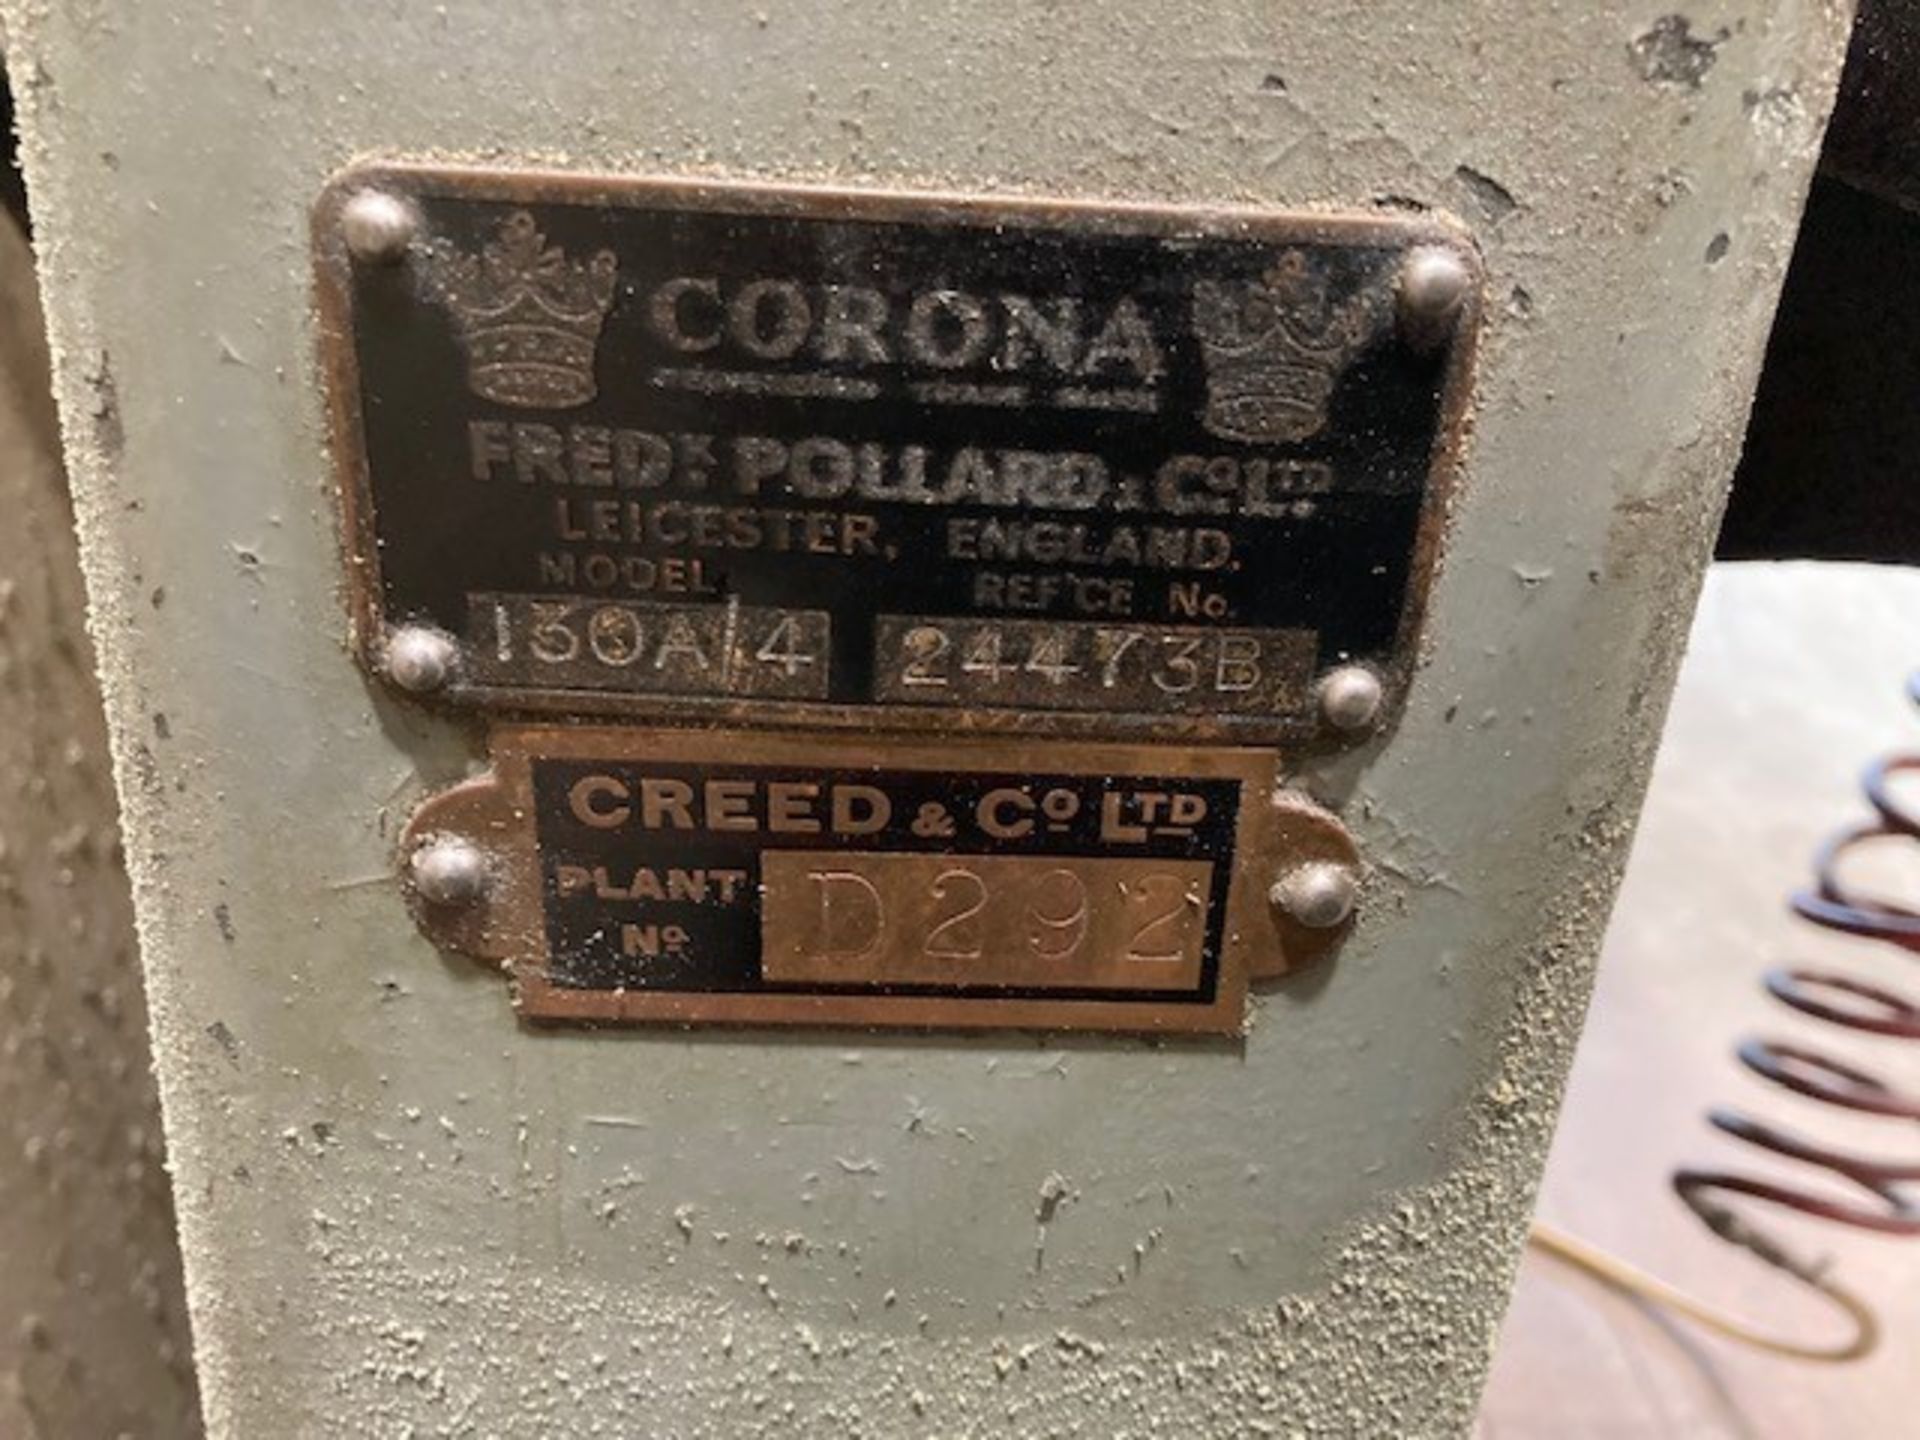 Corona Pollard 130A/4 Four Spindle Pillar Drill - Image 4 of 5